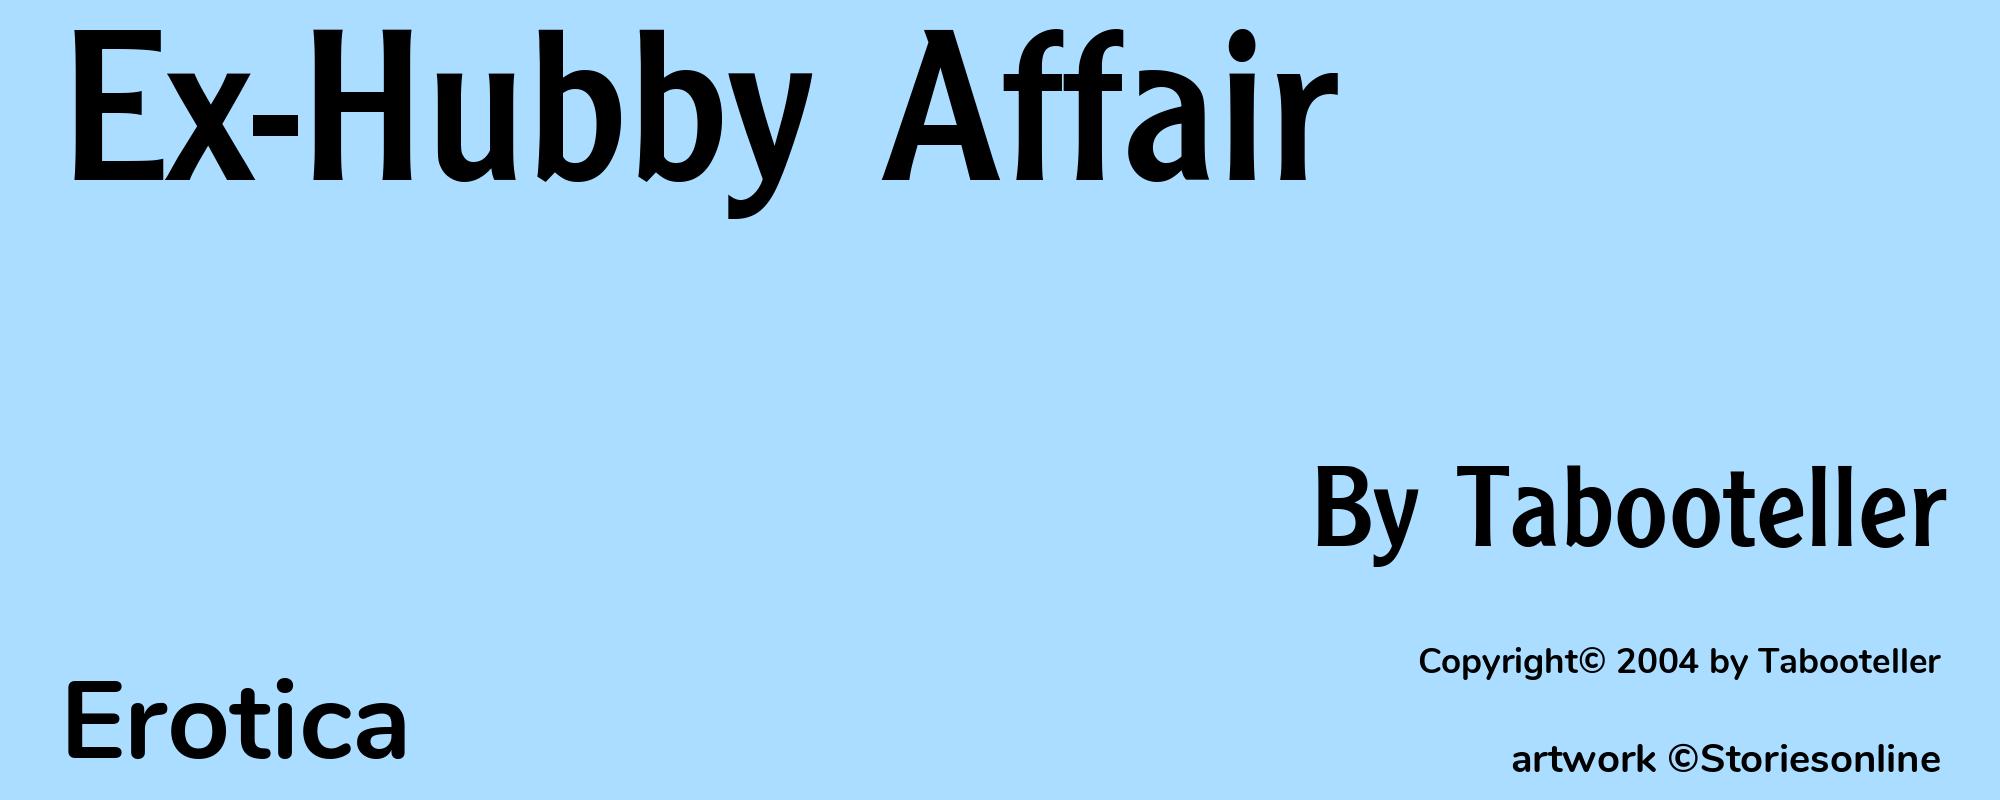 Ex-Hubby Affair - Cover